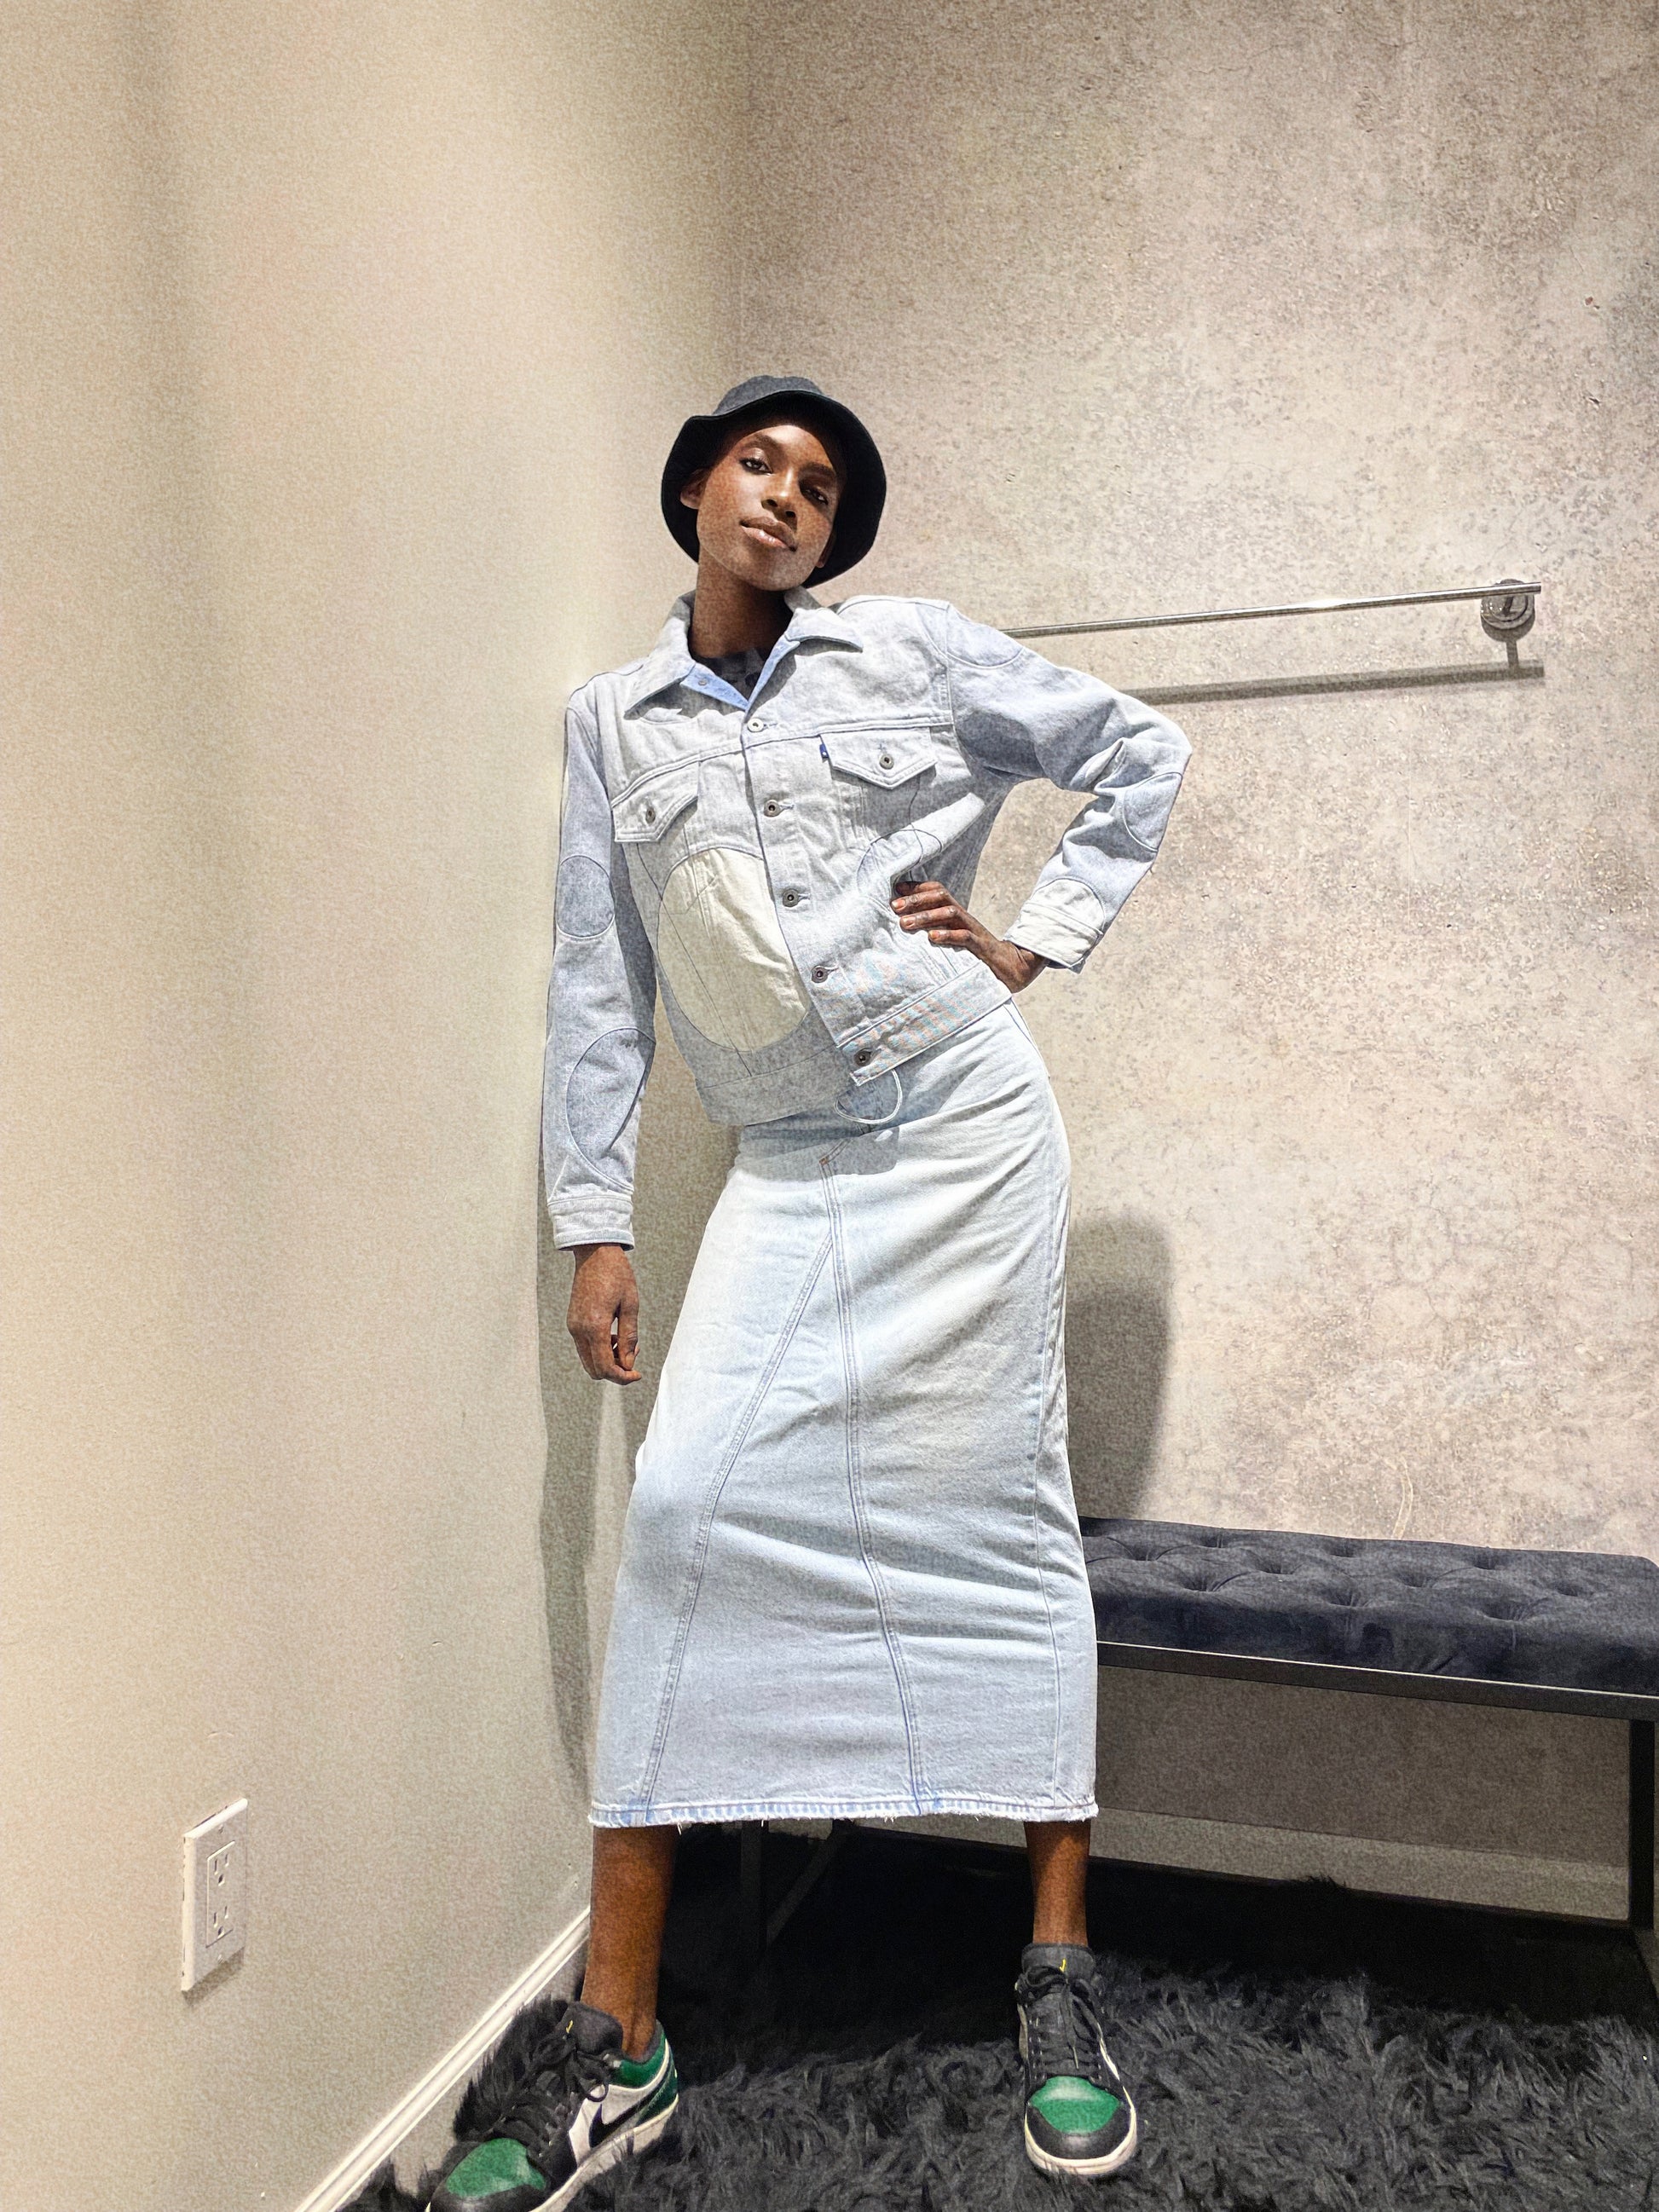 LEVIS: Women's Iconic Paneled Denim Maxi Skirt – 85 86 eightyfiveightysix